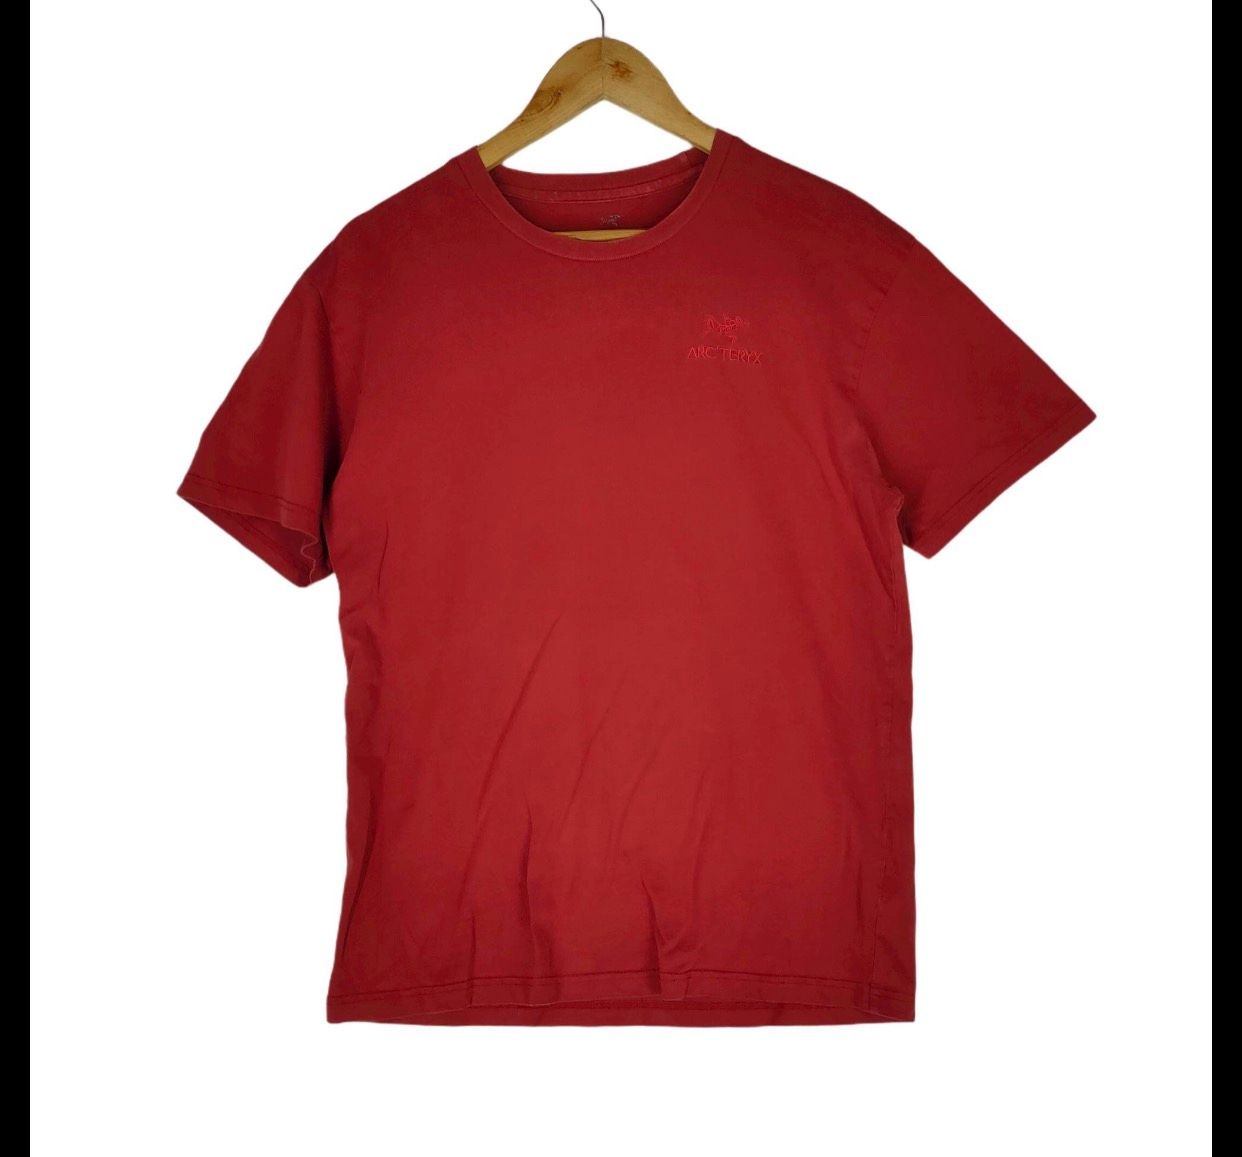 Vintage ARC’TERYX EMBROIDERY LOGO Round Neck Shirt - 1